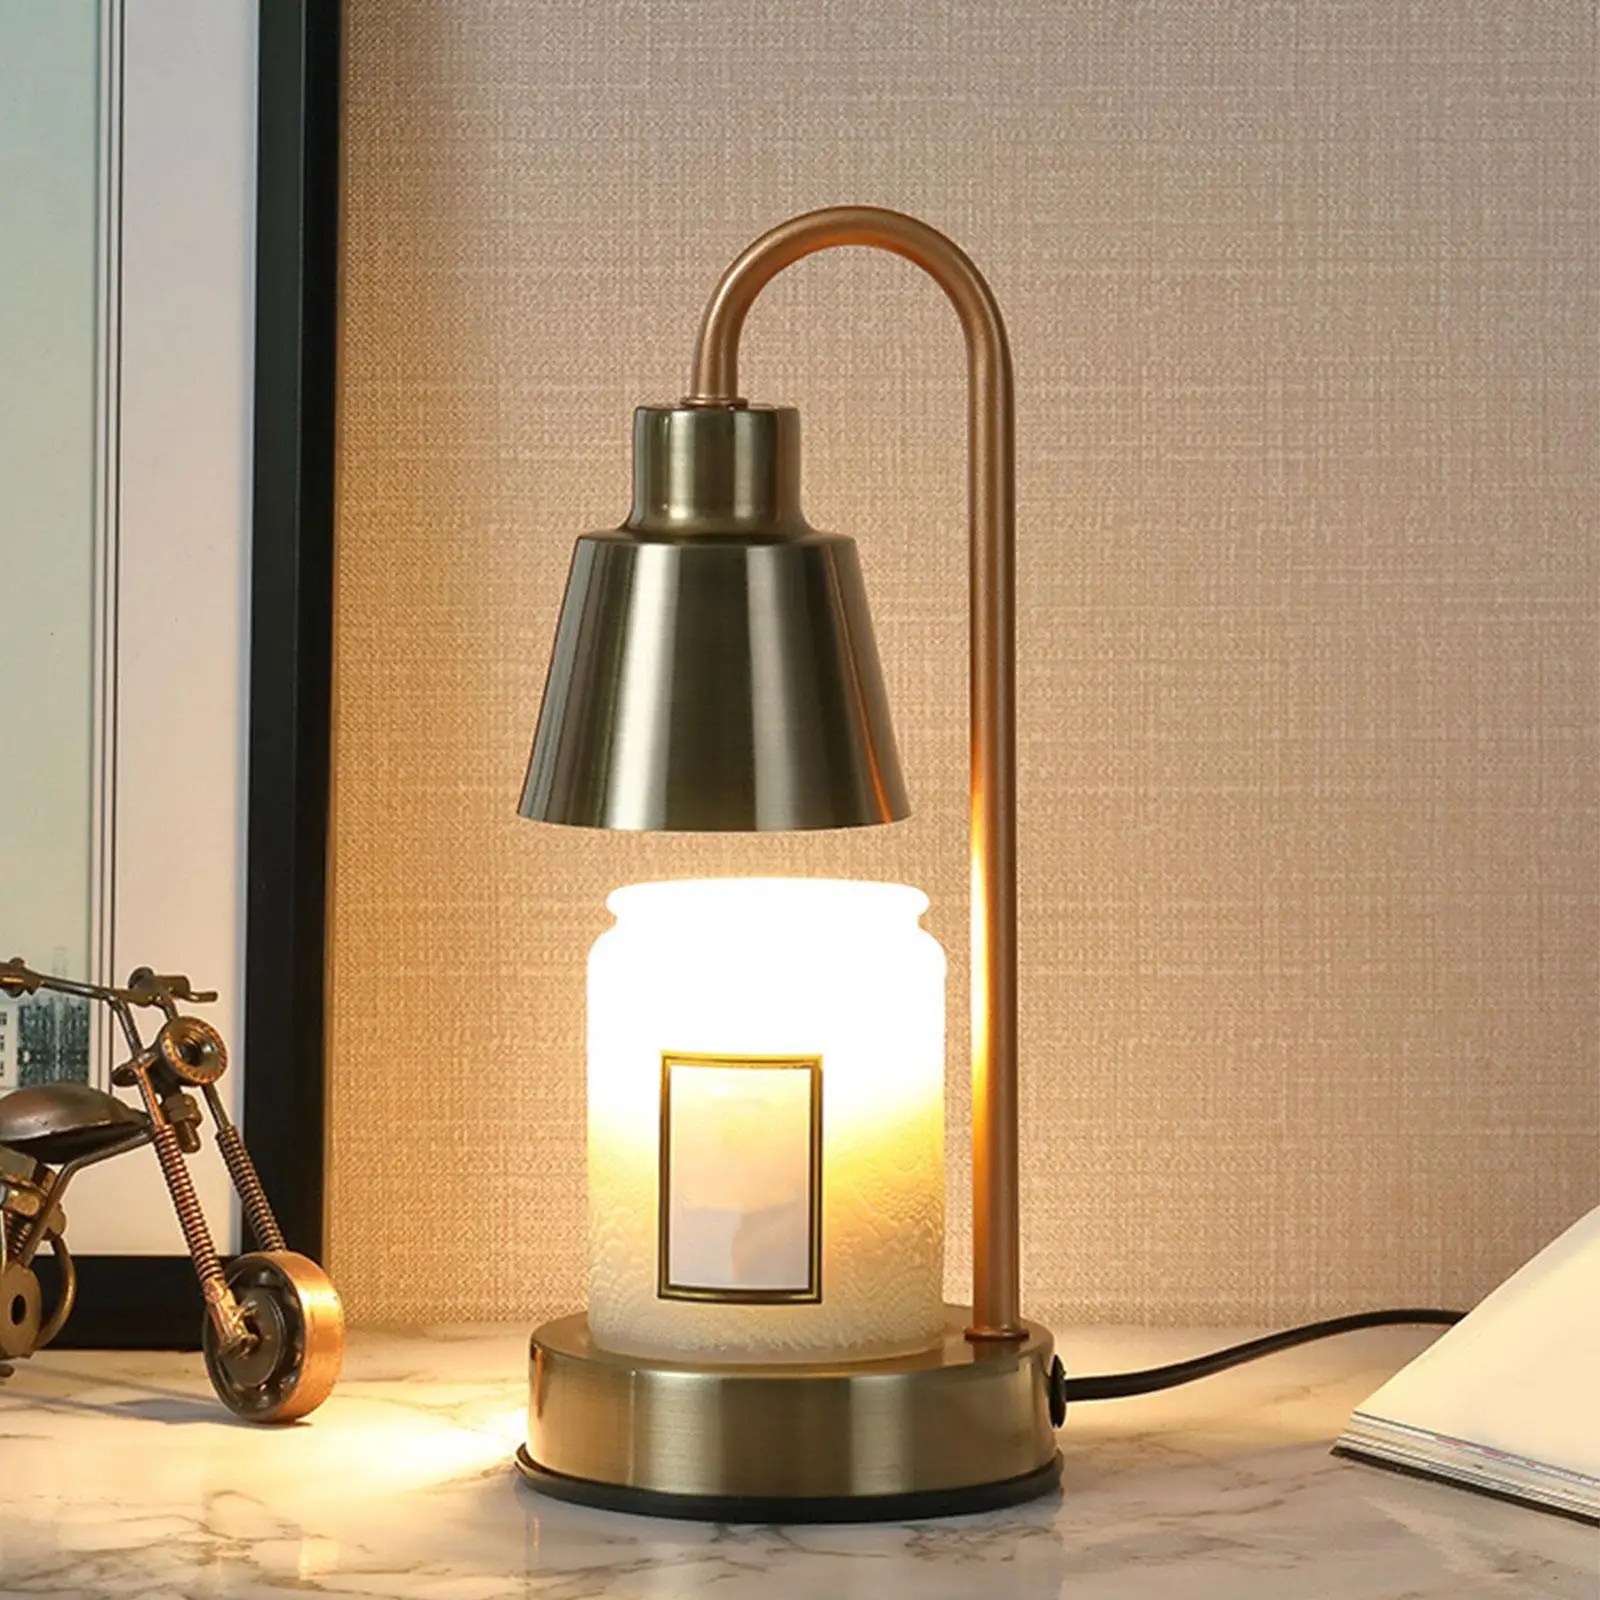 Lantern Night Light Romantic Iron Candlestick Bedroom Bedside Lamp LED Lighting 